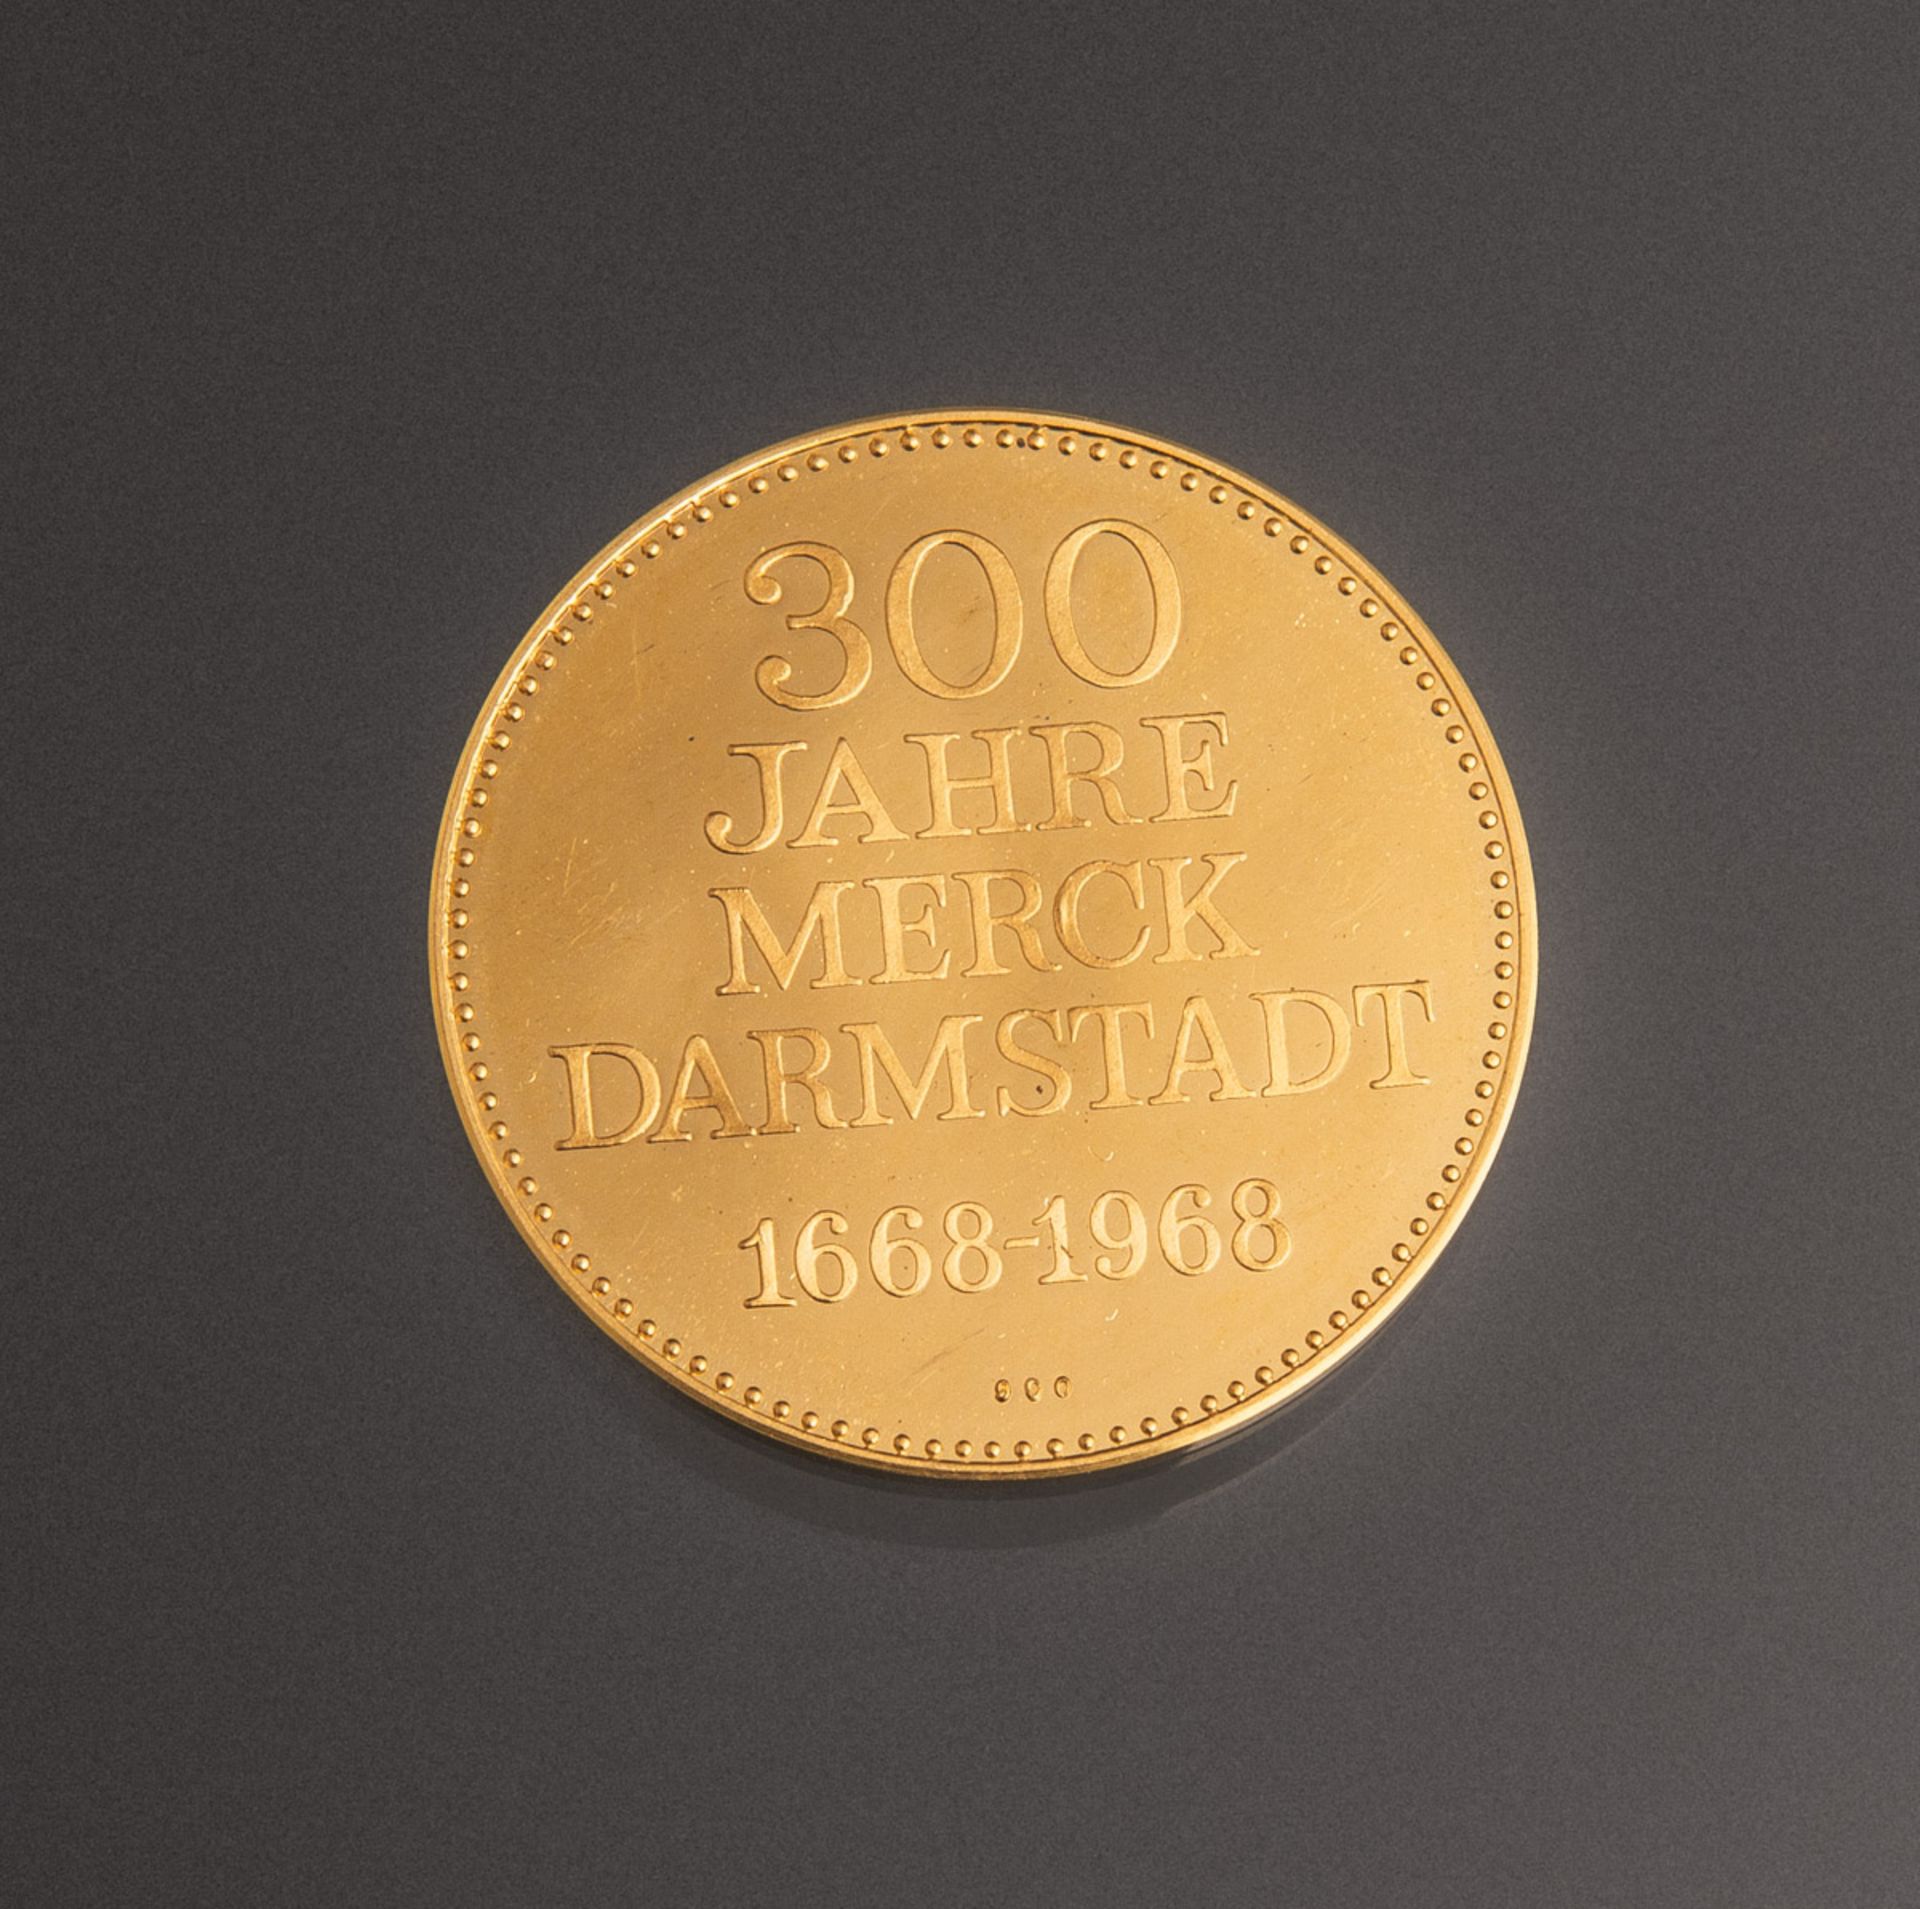 Goldmedaille 300 Jahre Merck Darmstadt (1668 - 1968) - Image 2 of 2